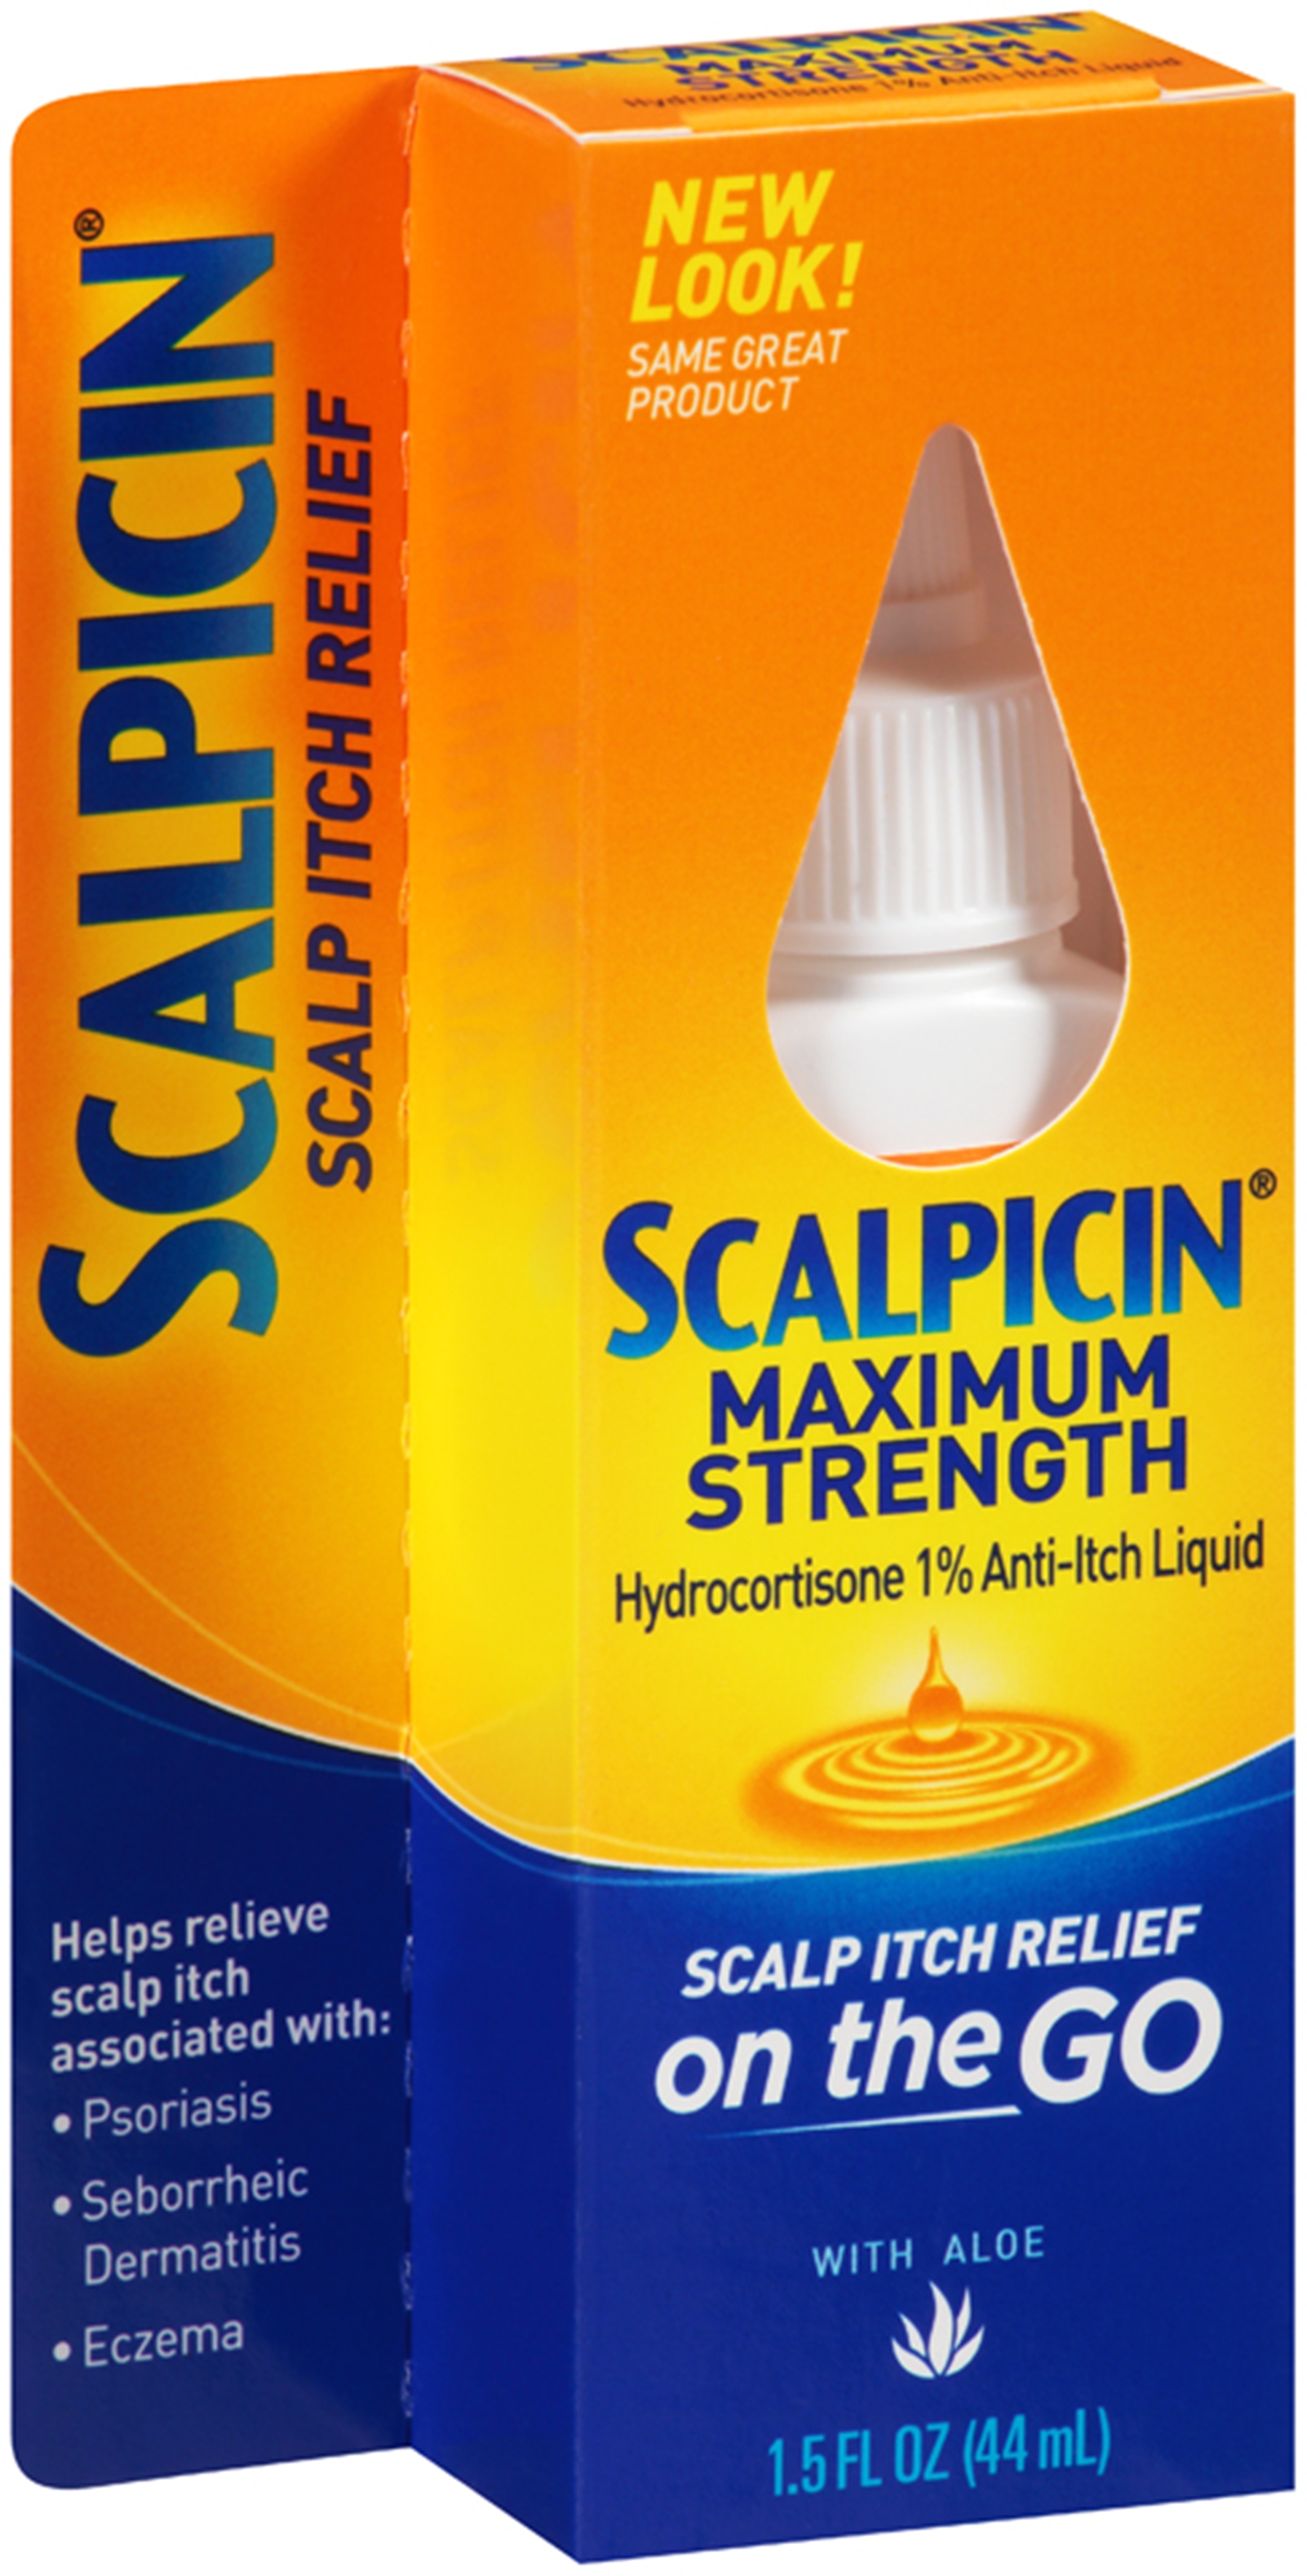 Scalpicin Max Strength Scalp Itch Treatment, 1.5 Oz.